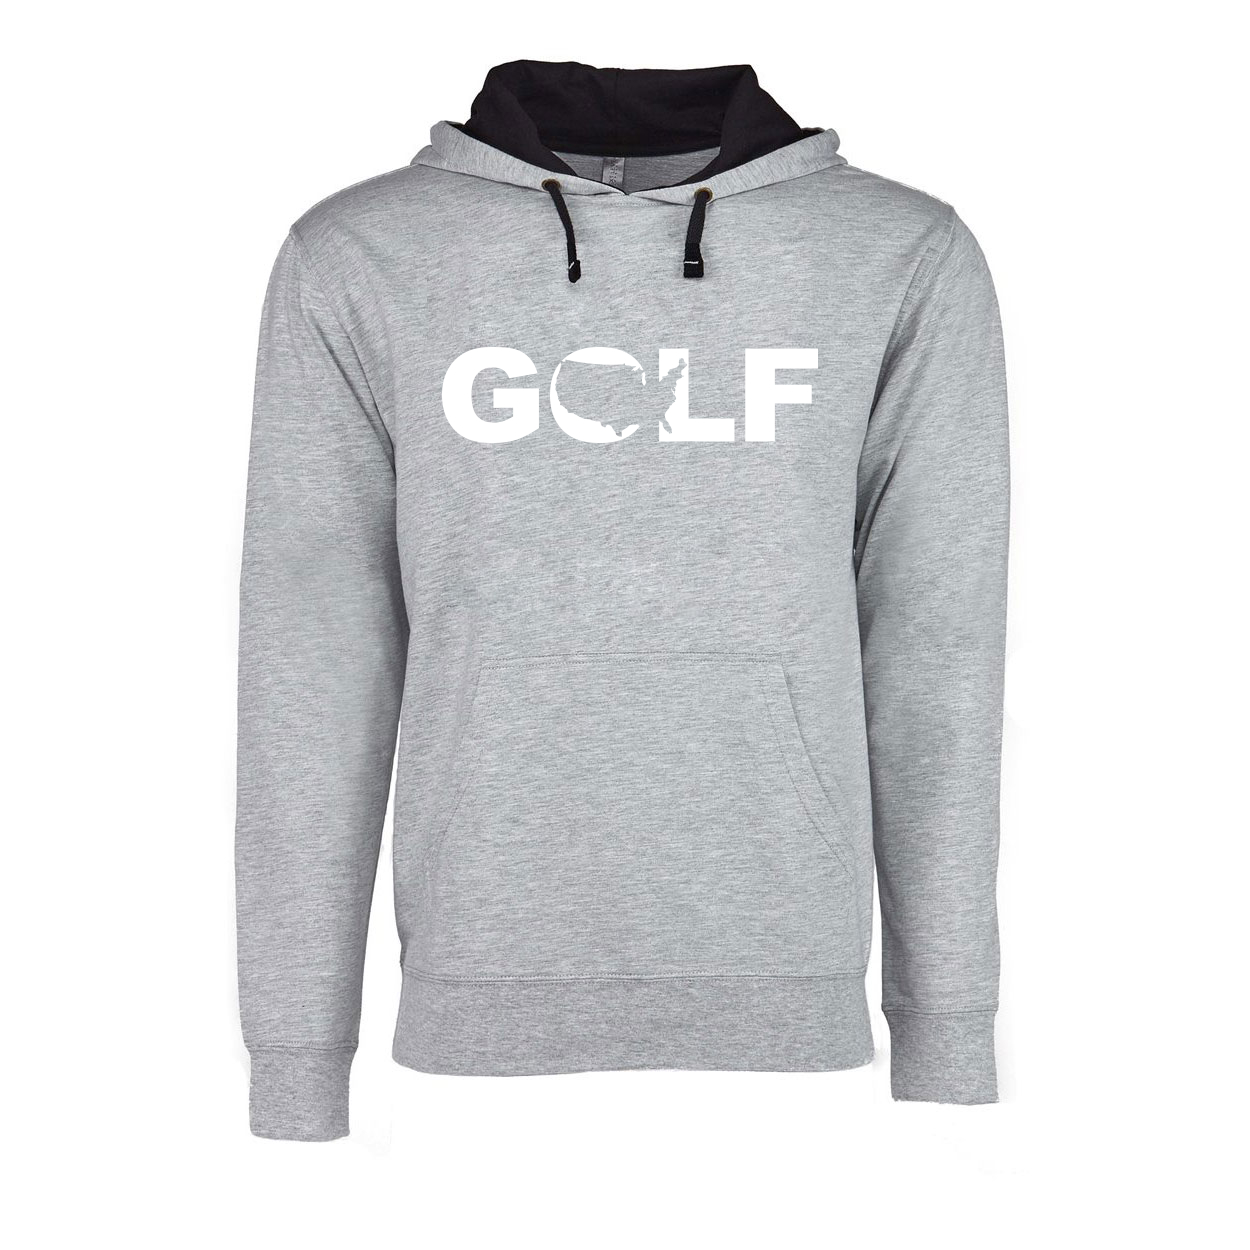 Golf United States Classic Lightweight Sweatshirt Heather Gray/Black (White Logo)